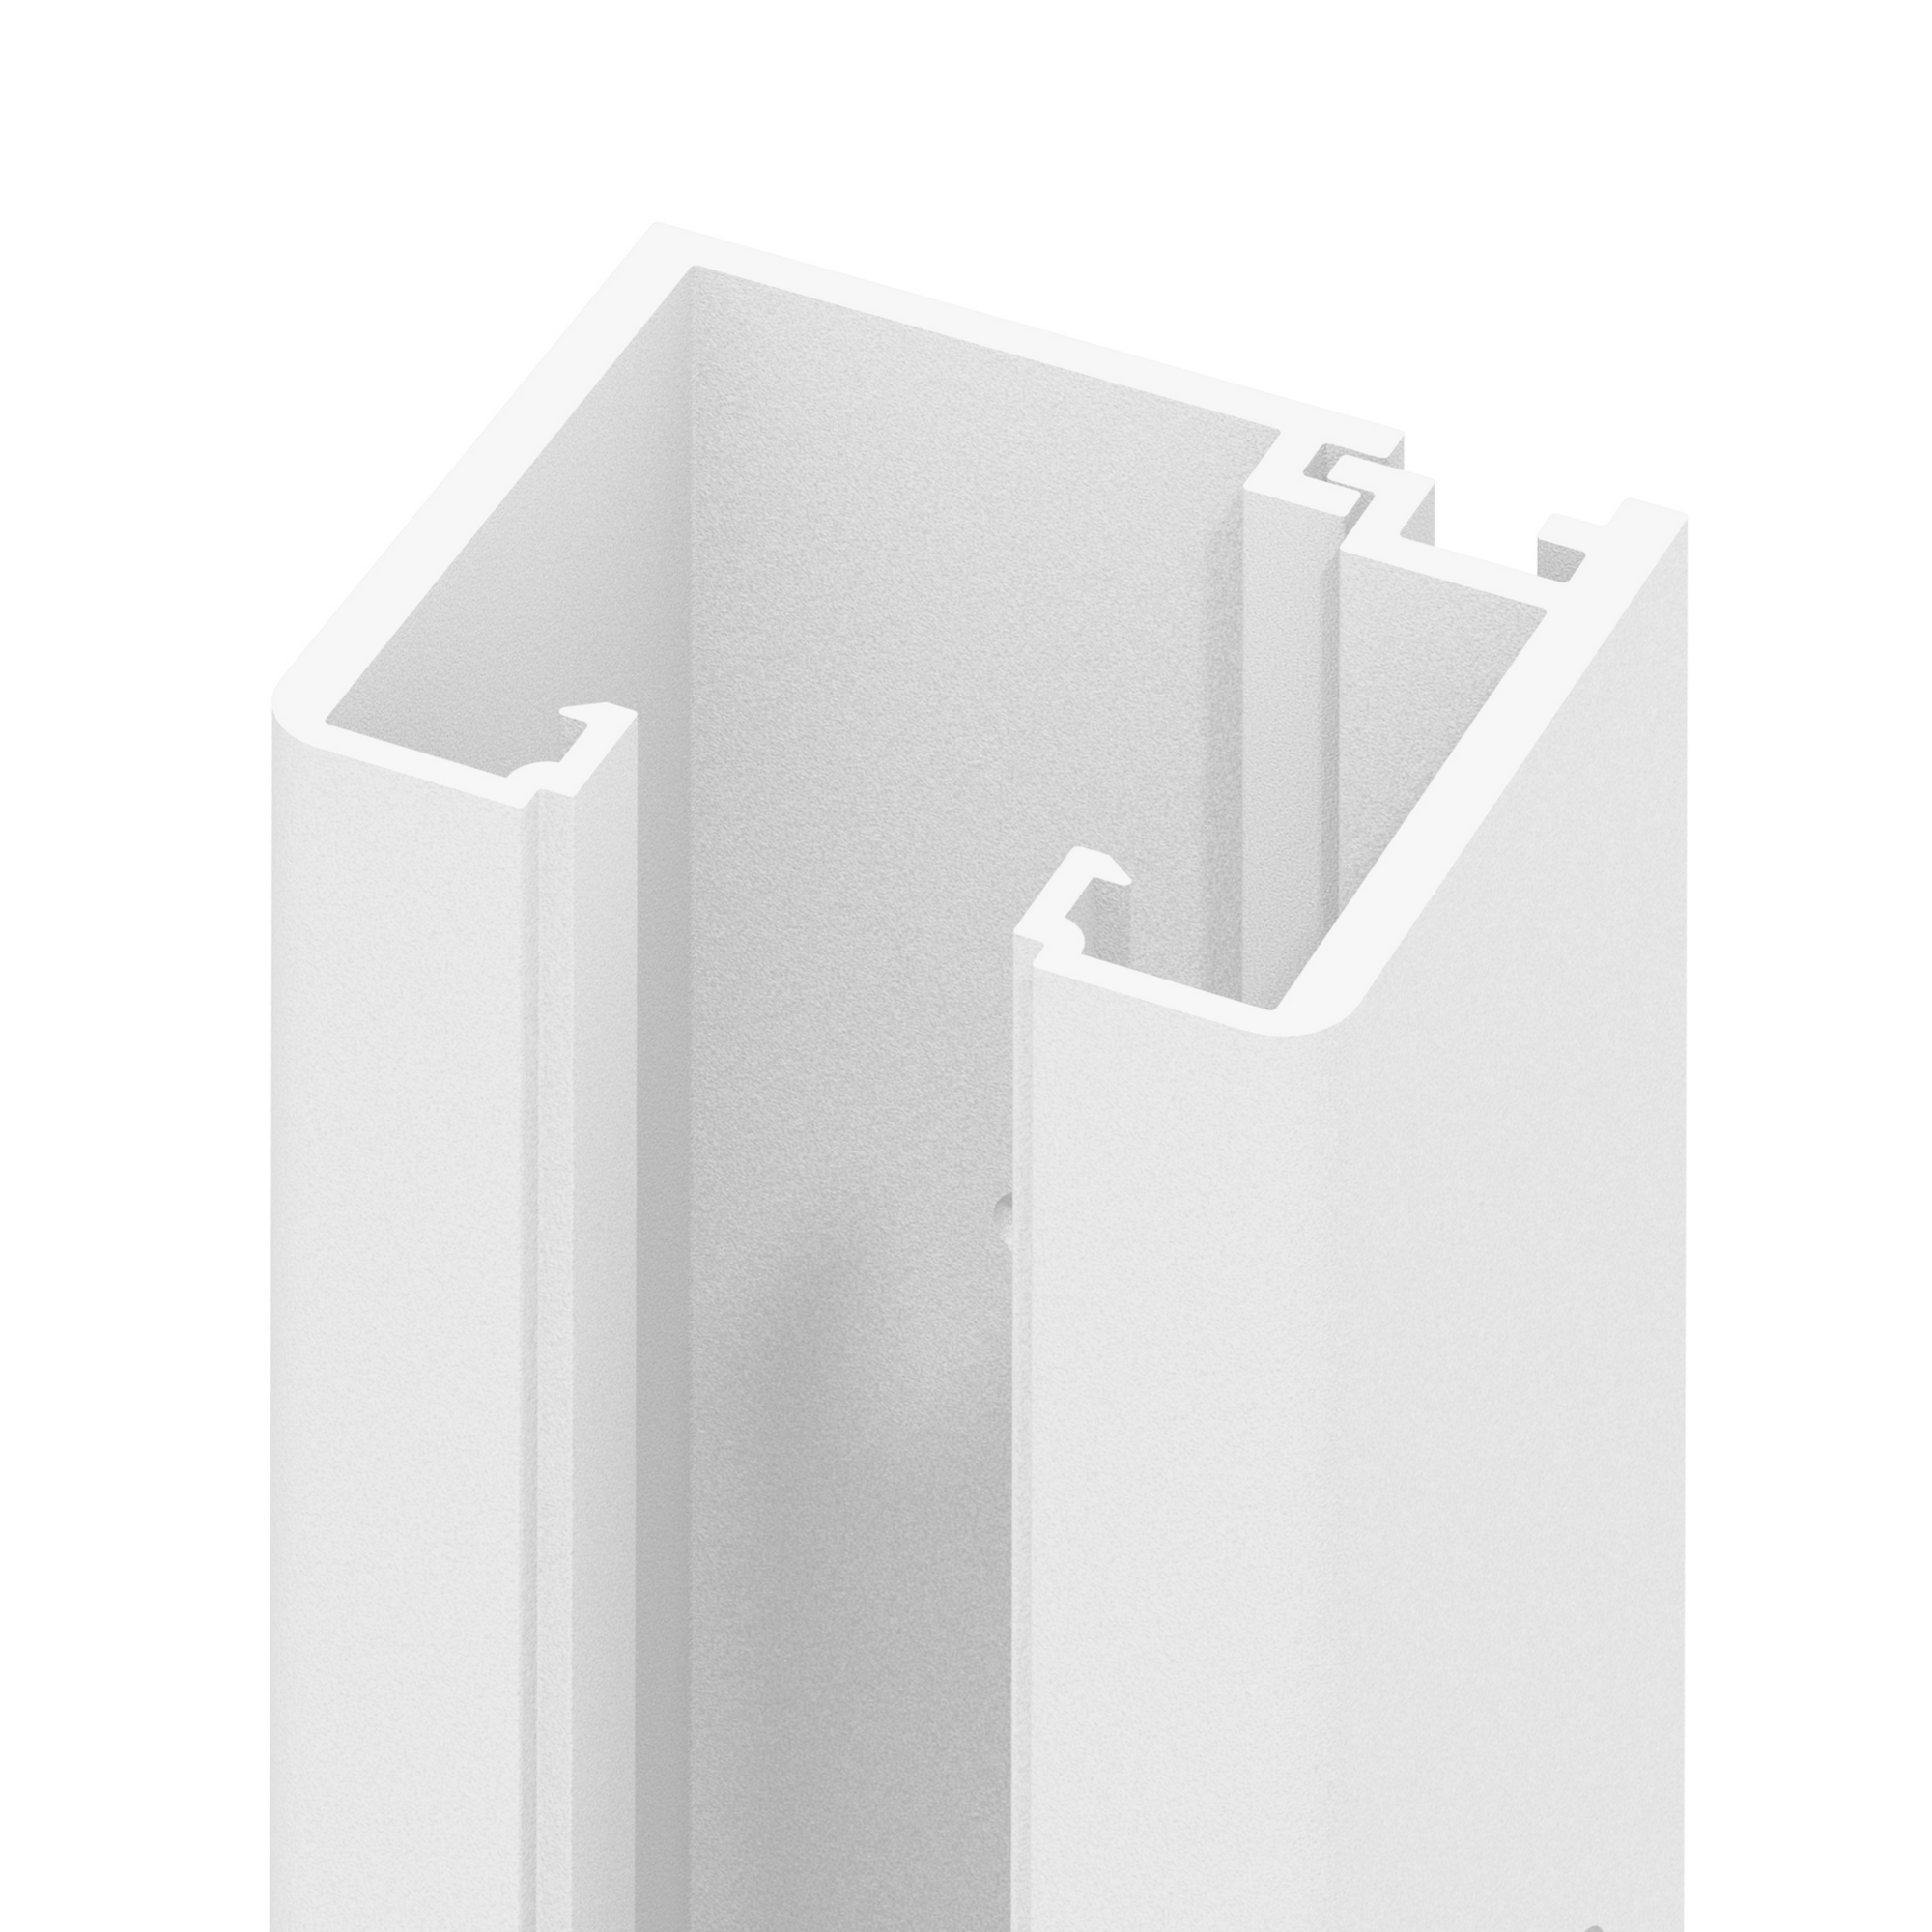 U-Klemmprofil 'System' weiß 192 cm + product picture